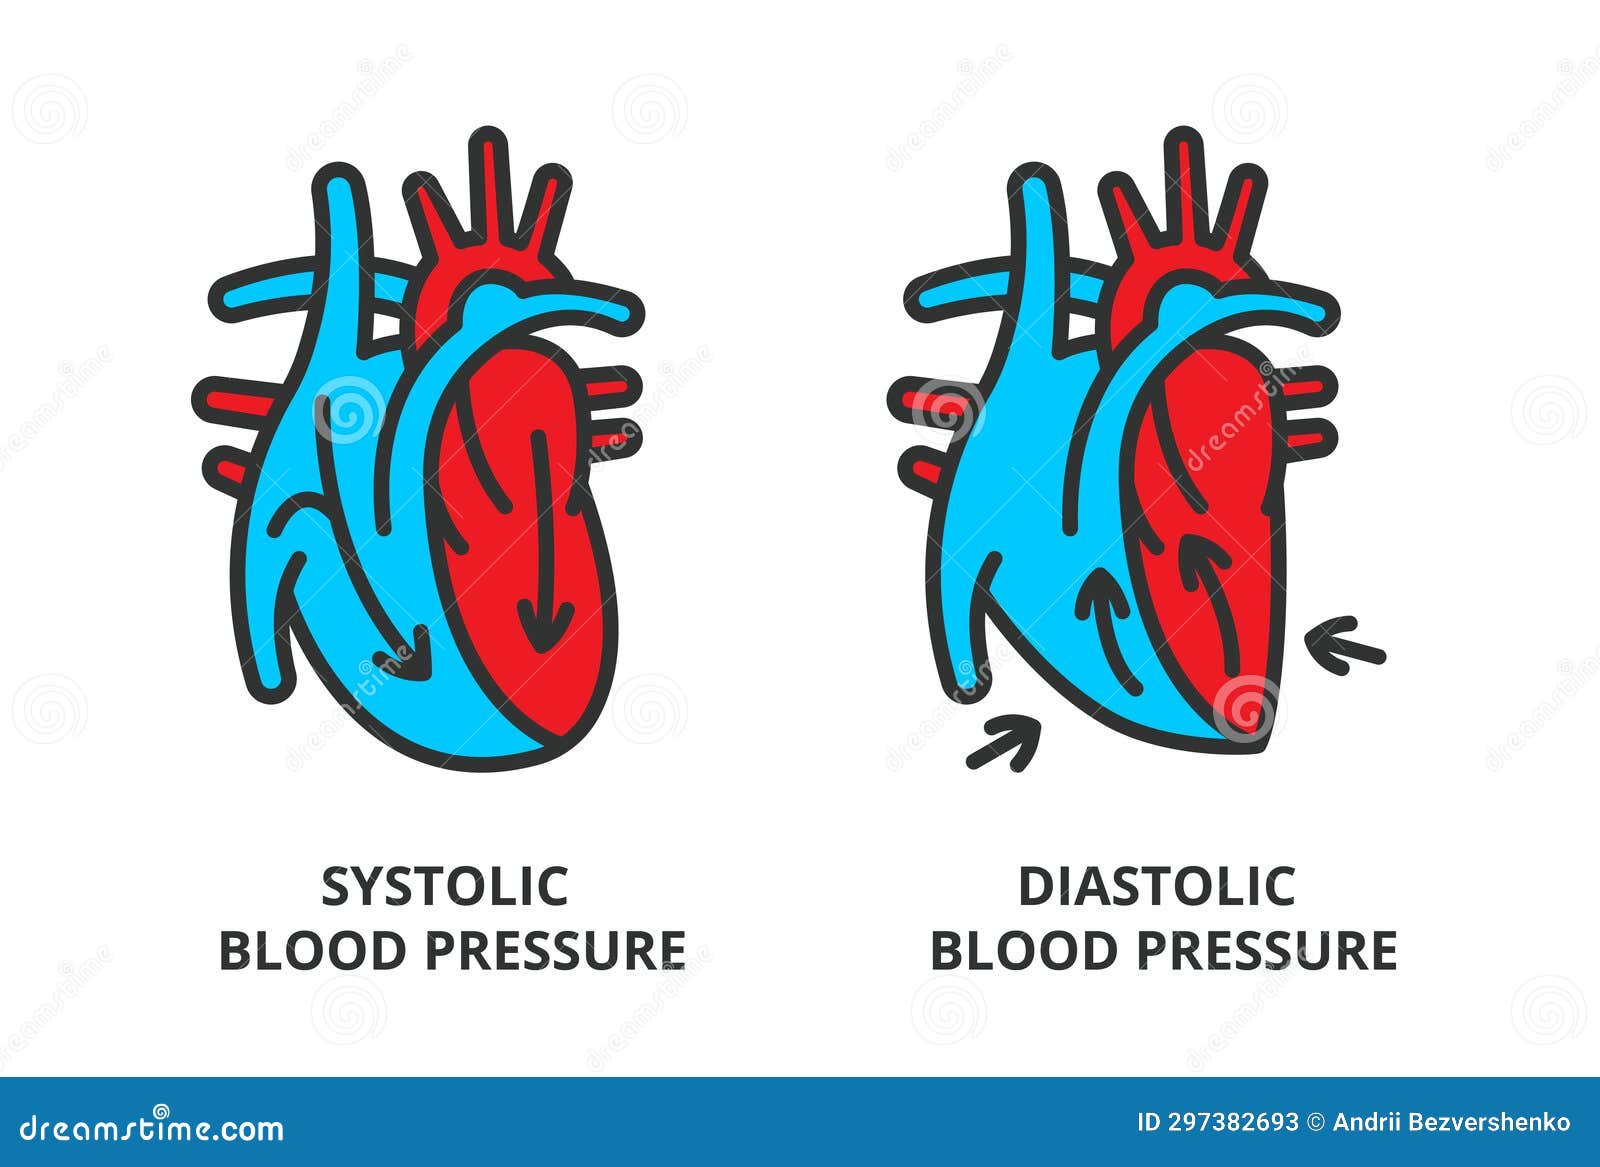 systolic blood pressure and diastolic blood pressure icons in line , red and blue. pressure, systolic, skills